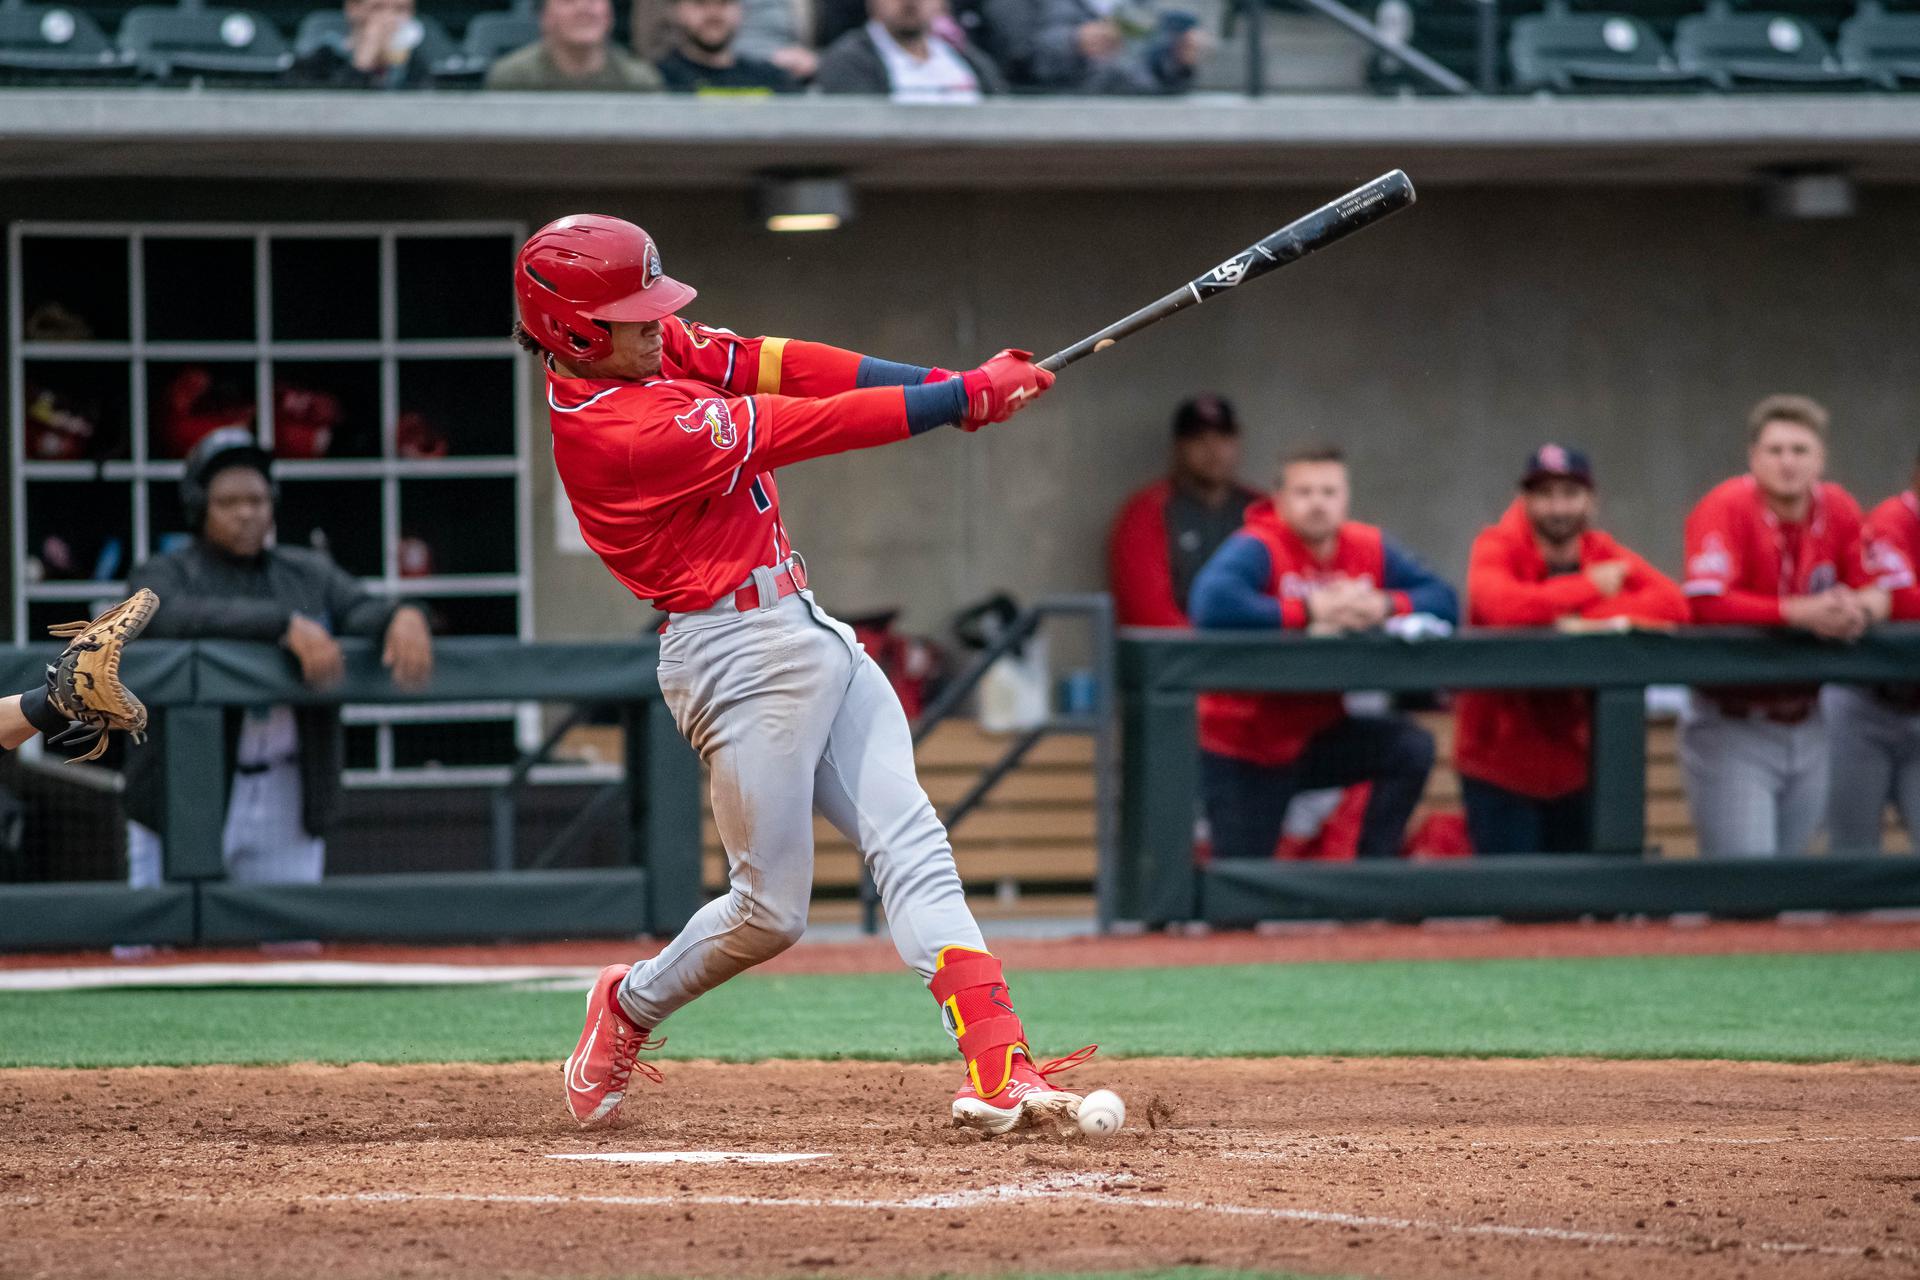 Cardinals Minor League player Masyn Winn swings the bat while wearing a red uniform